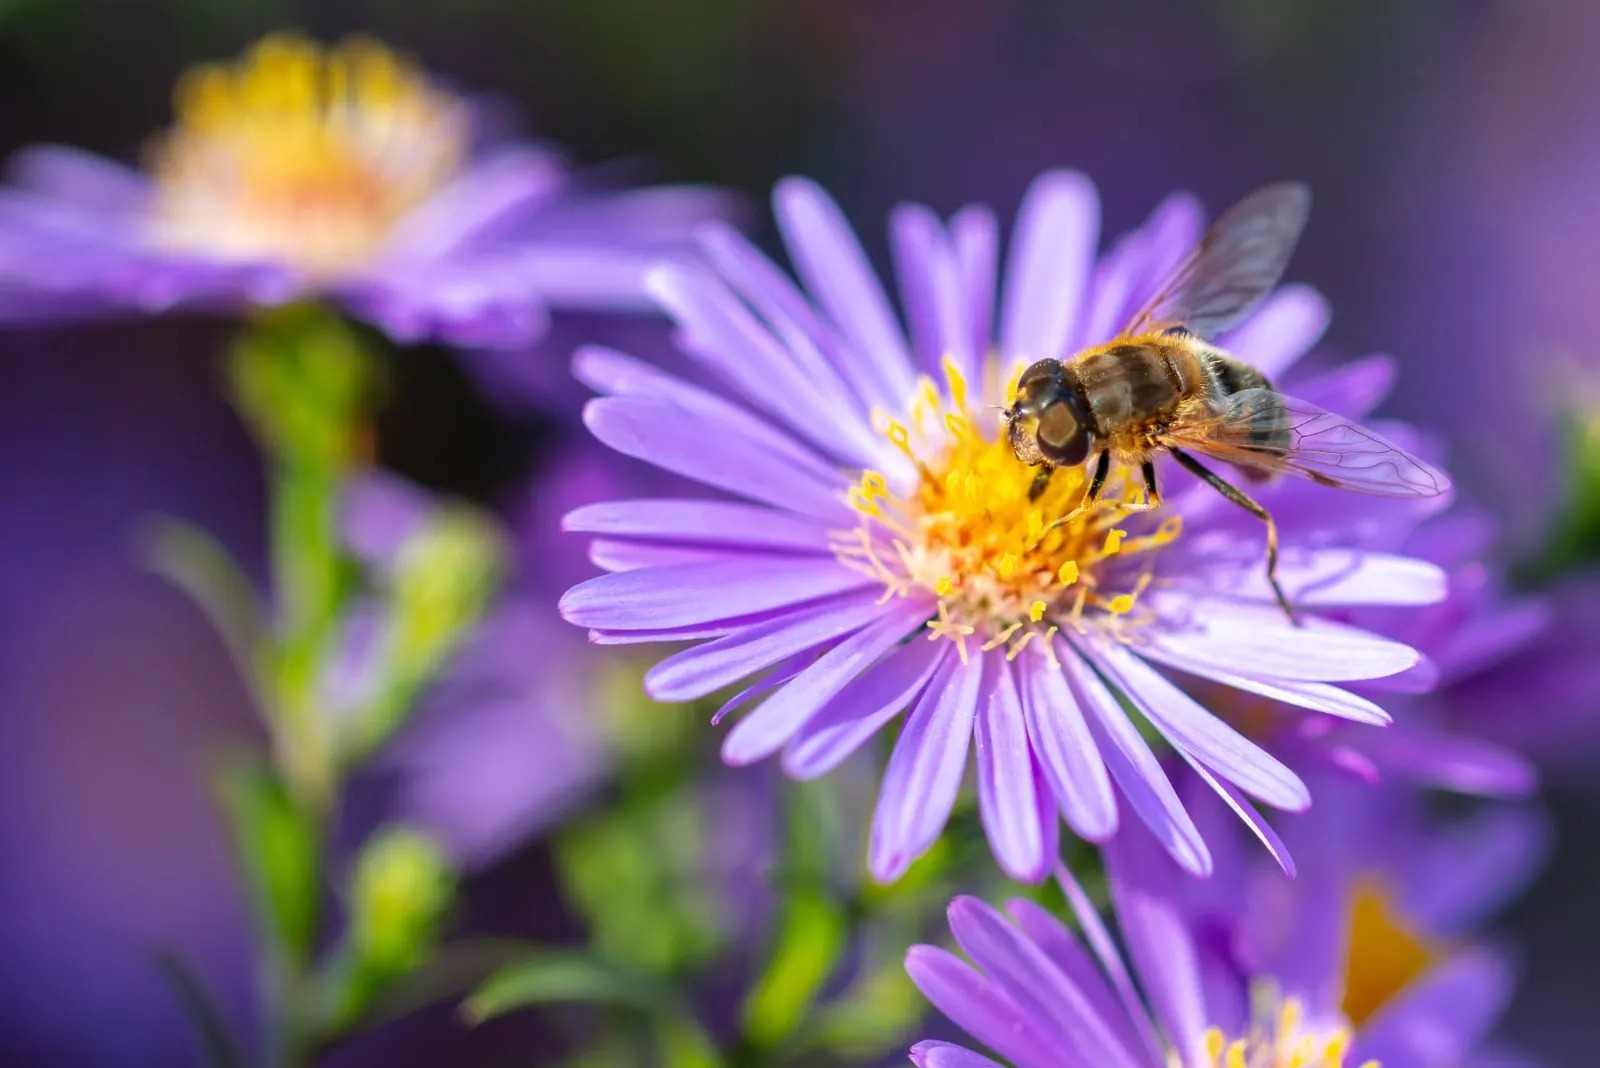 a bee landed on a purple flower